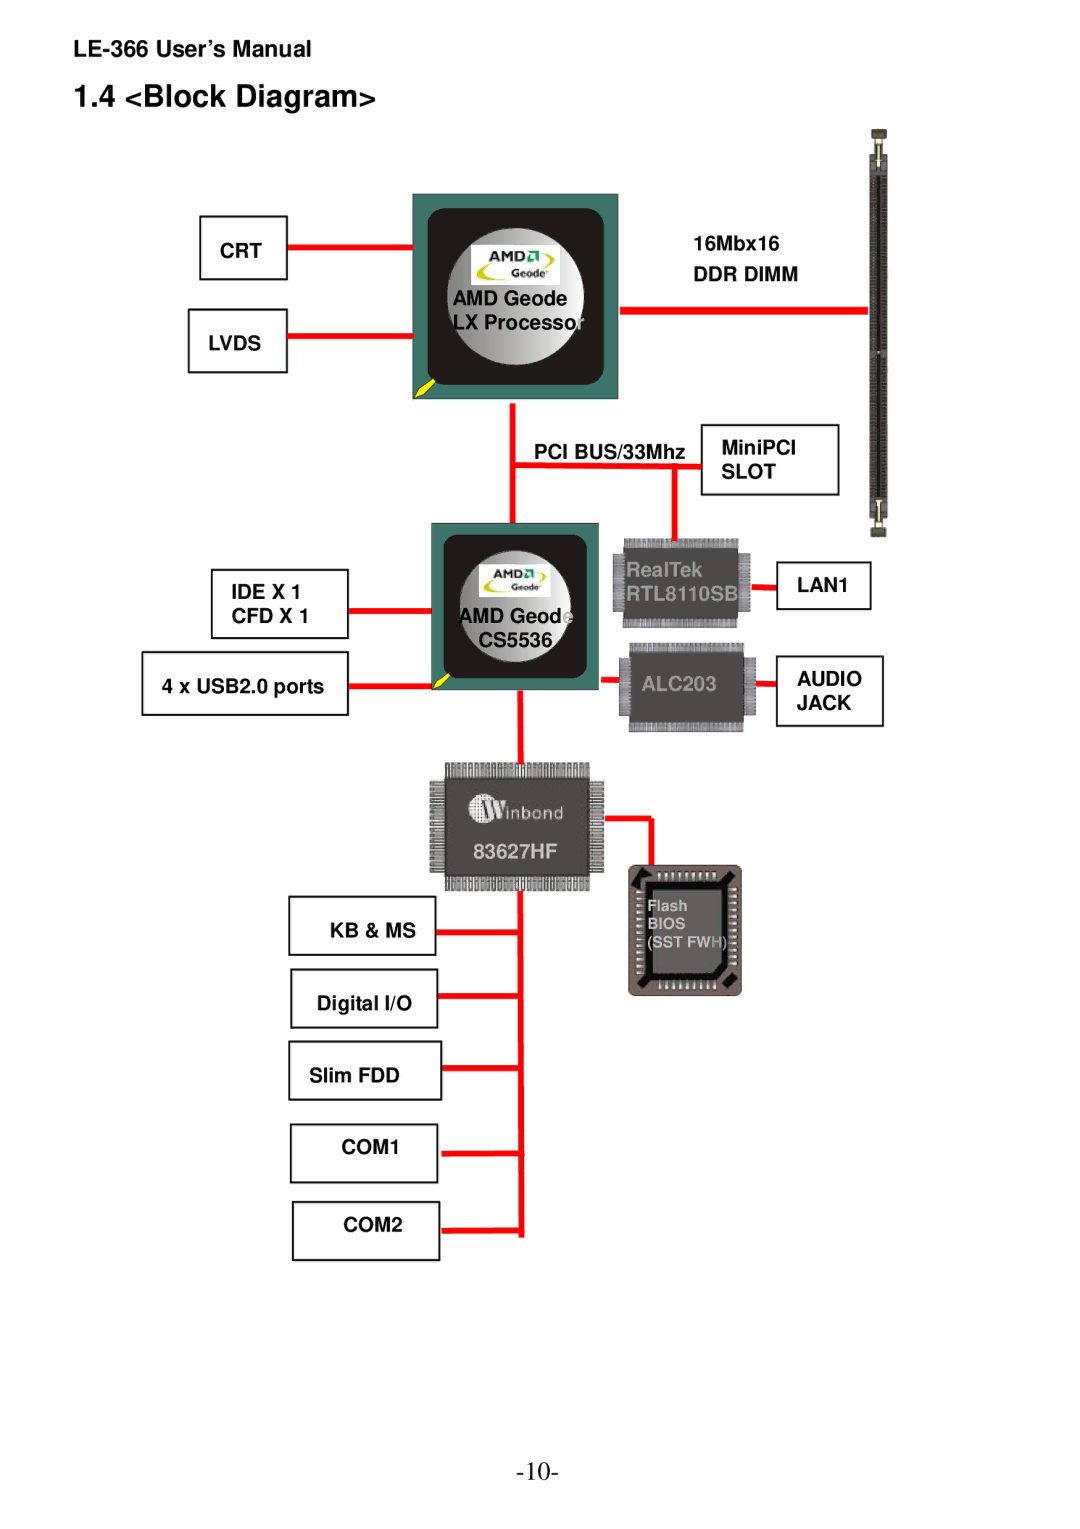 AMD LE-366 user manual Block Diagram 